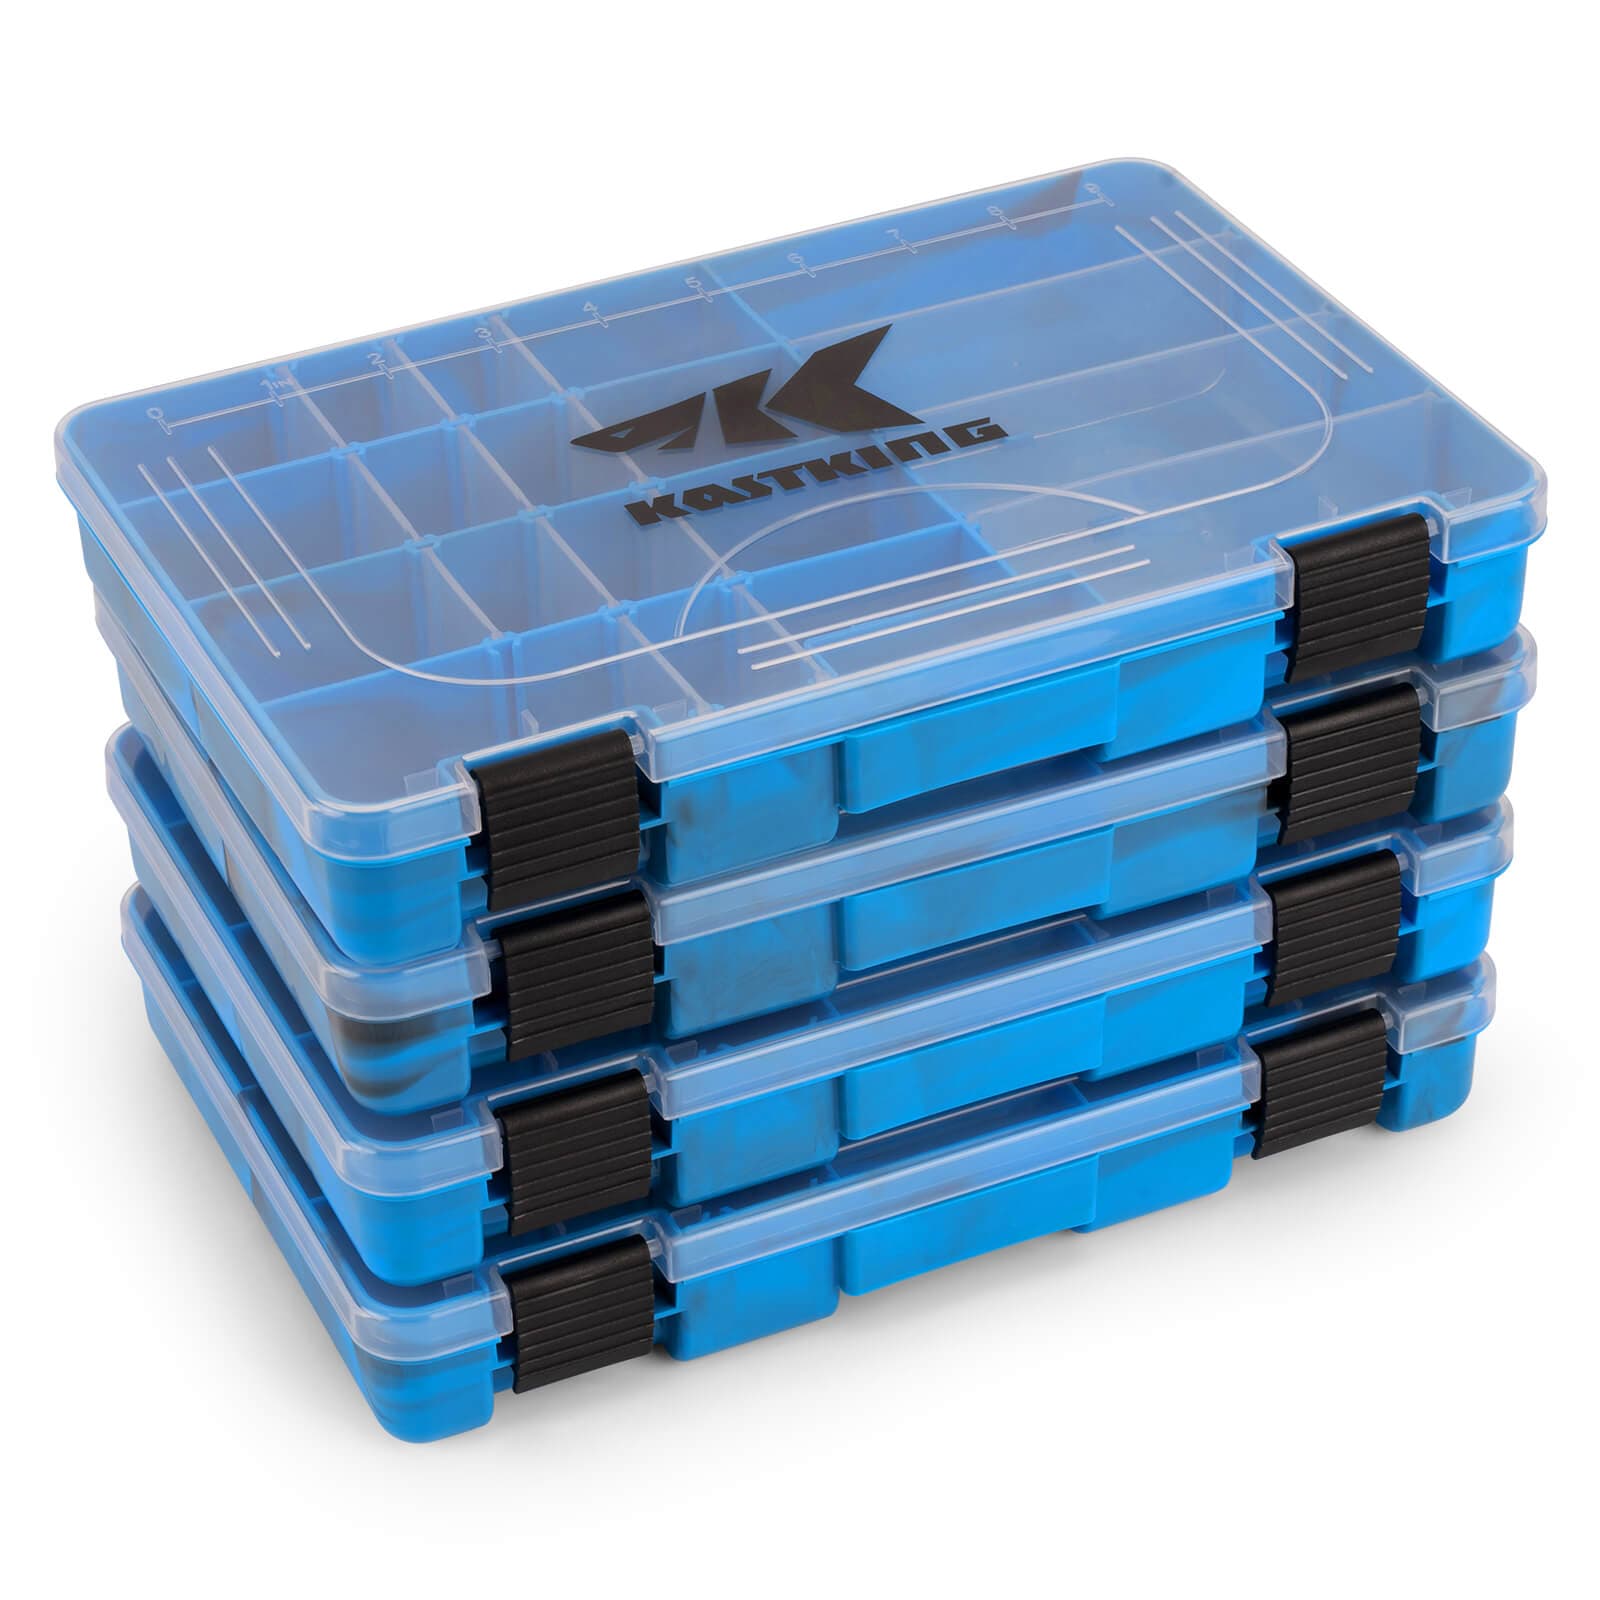 KastKing Tackle Boxes, Plastic Storage Organizer Box with